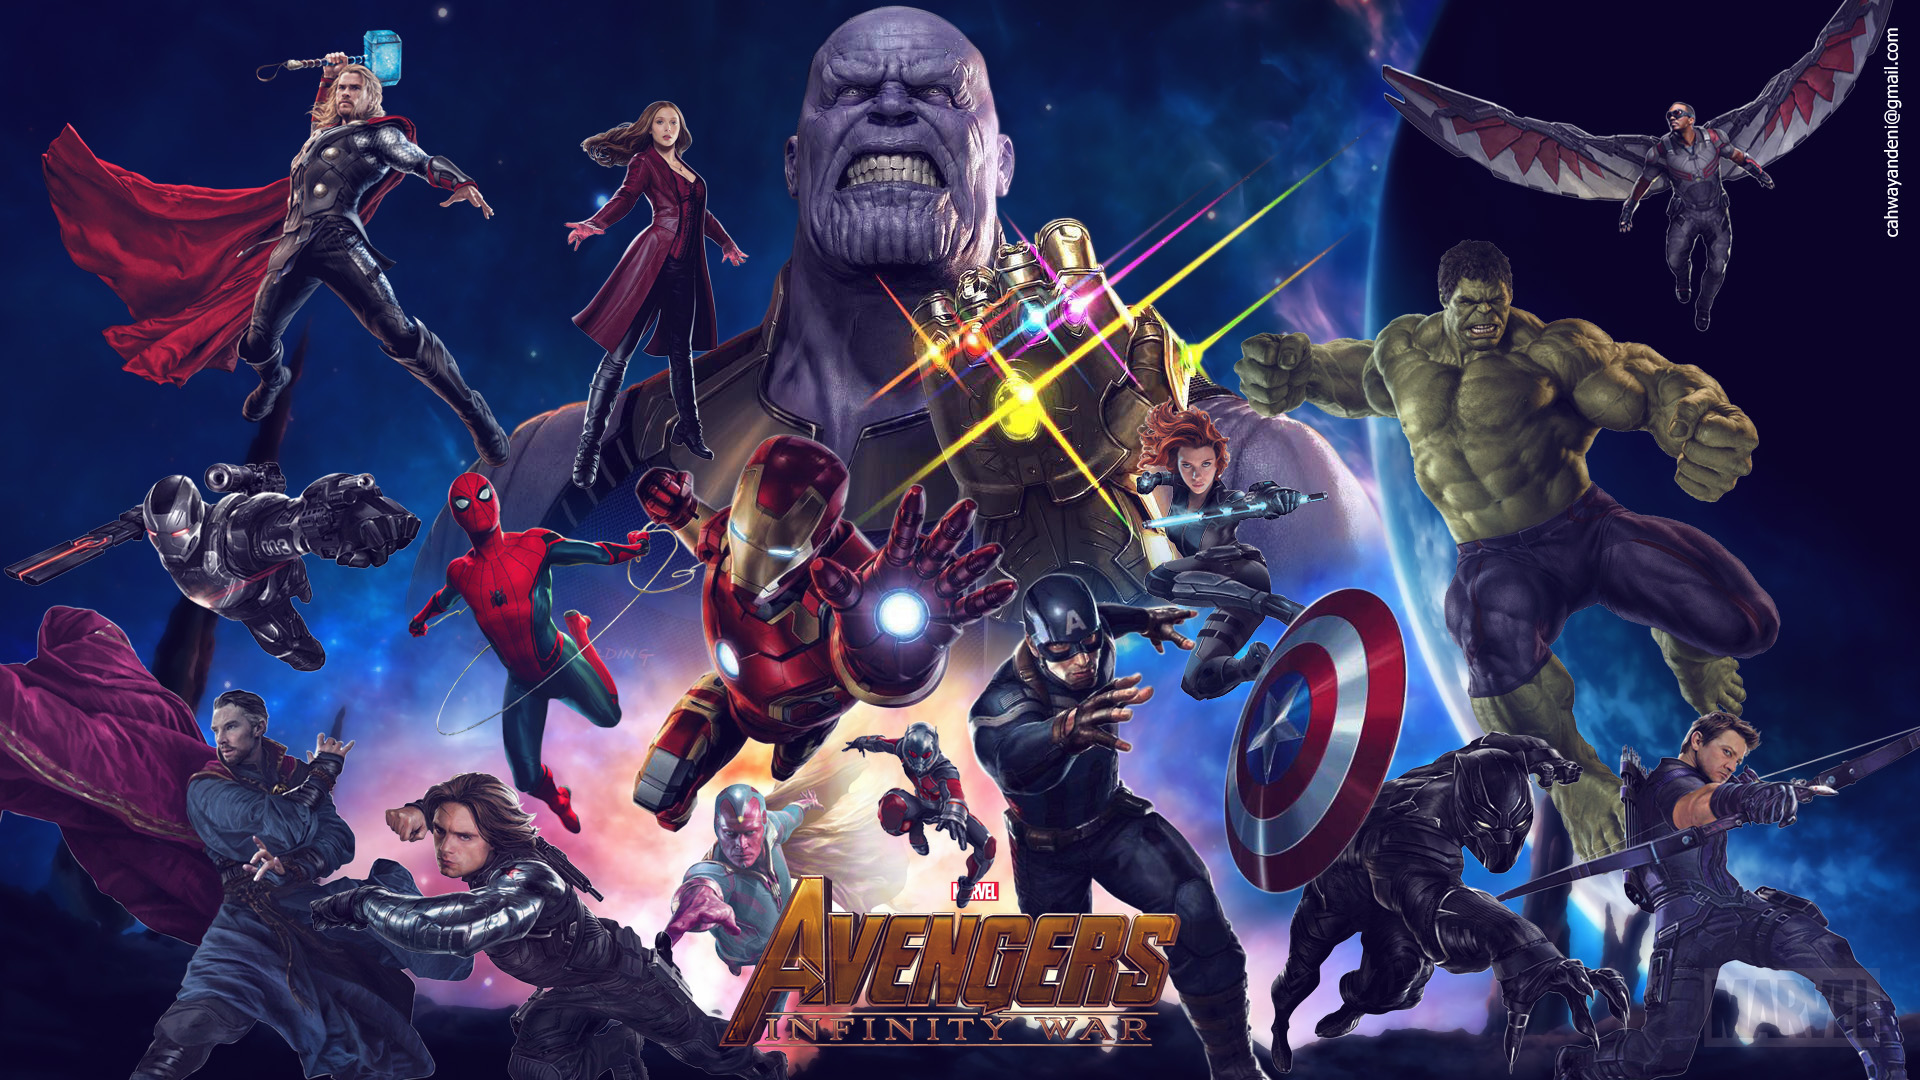  دانلود فیلم انتقام جویان Avengers Infinity War 2018 دوبله فارسی 